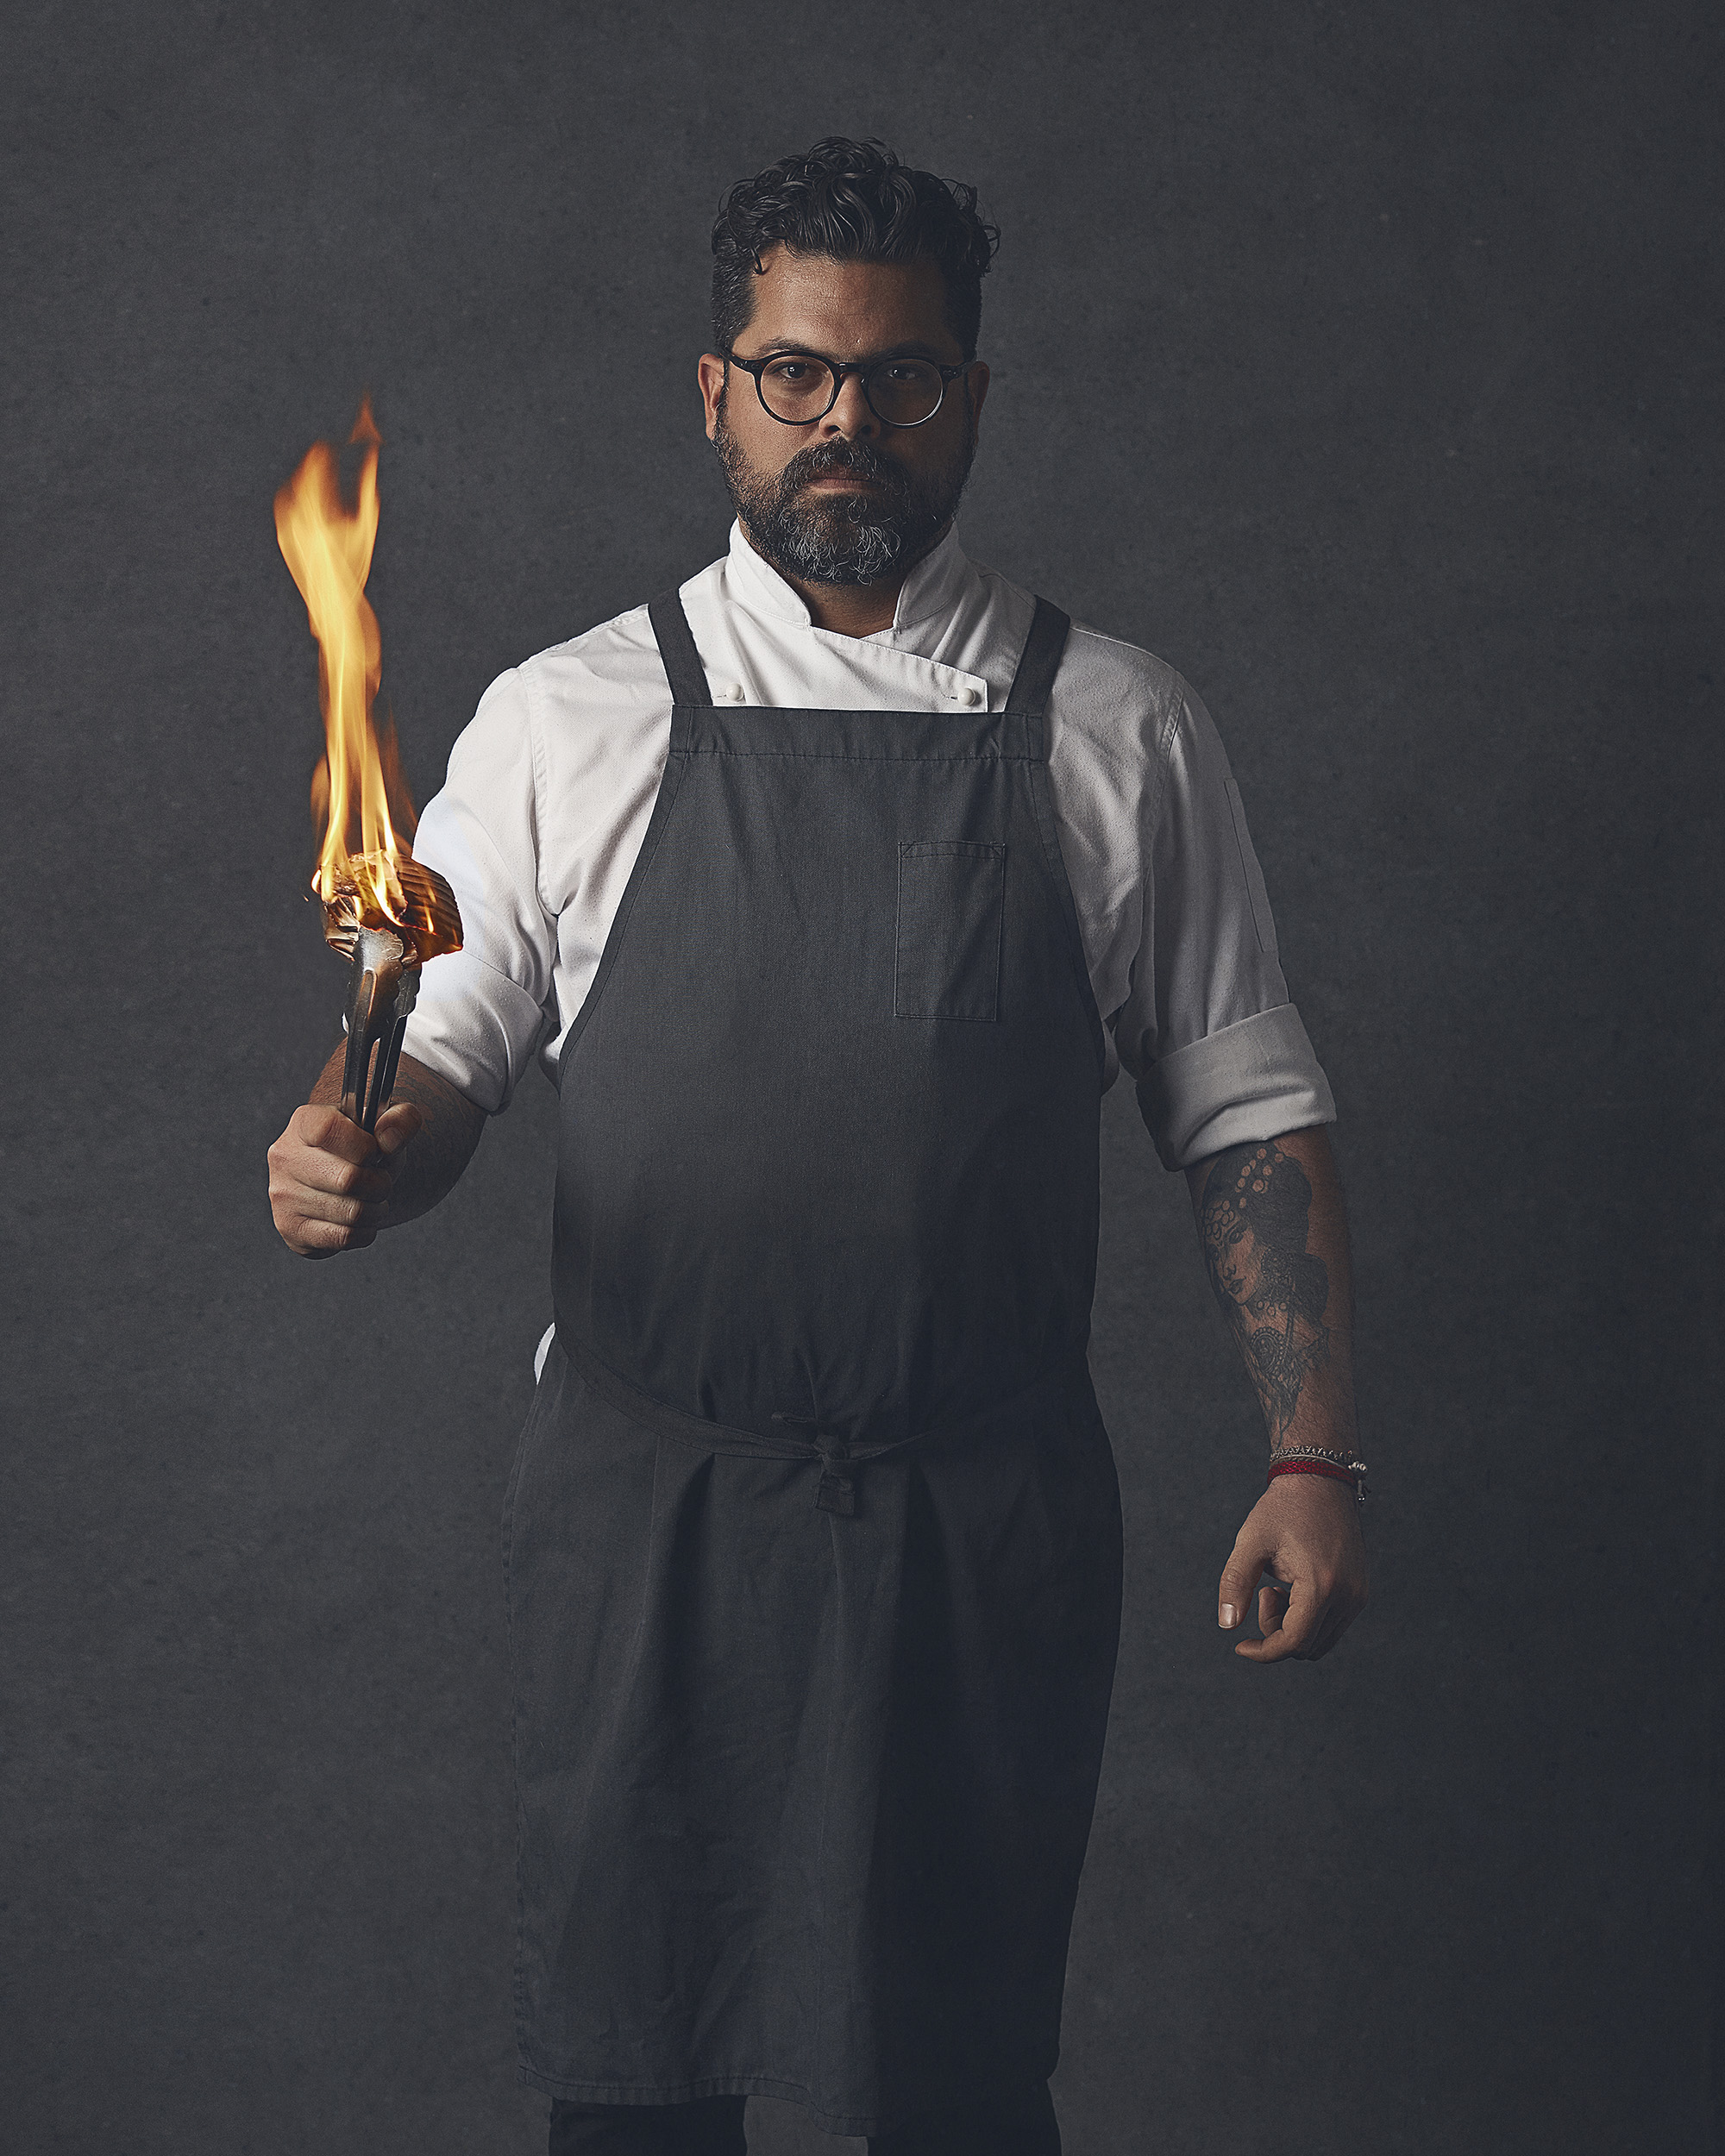 melbourne-chefs-thom-rigney-professional-photographer-advertising-portraits-food-012